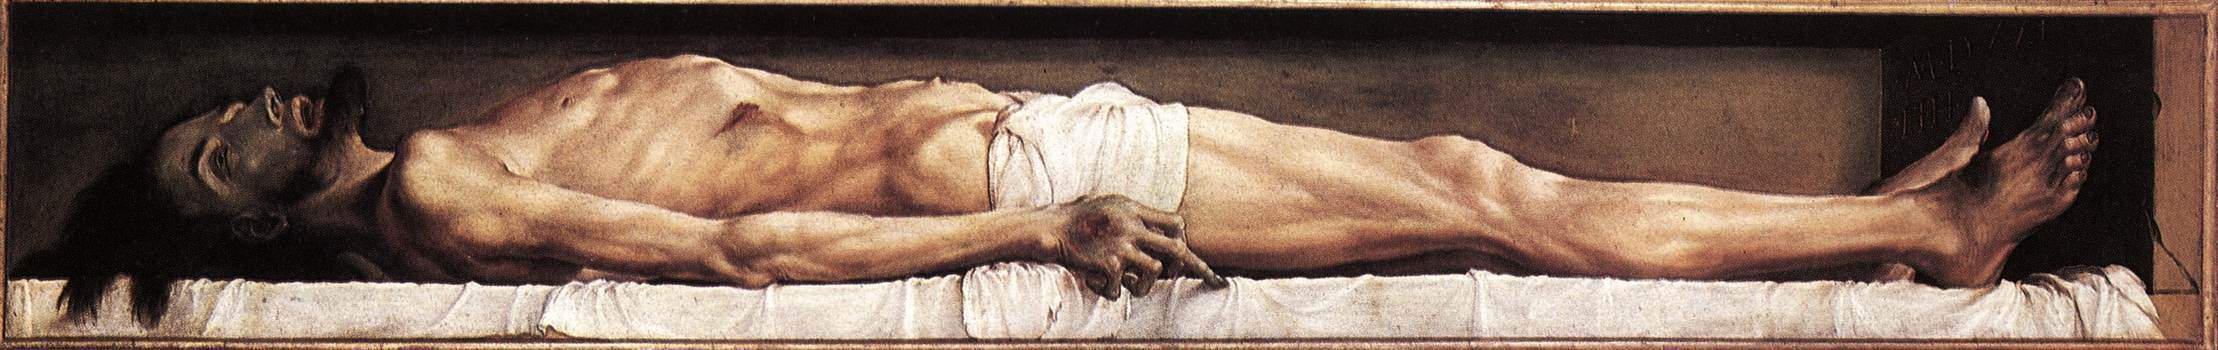 The Body of the Dead Christ in the Tomb — Ганс Гольбейн Младший